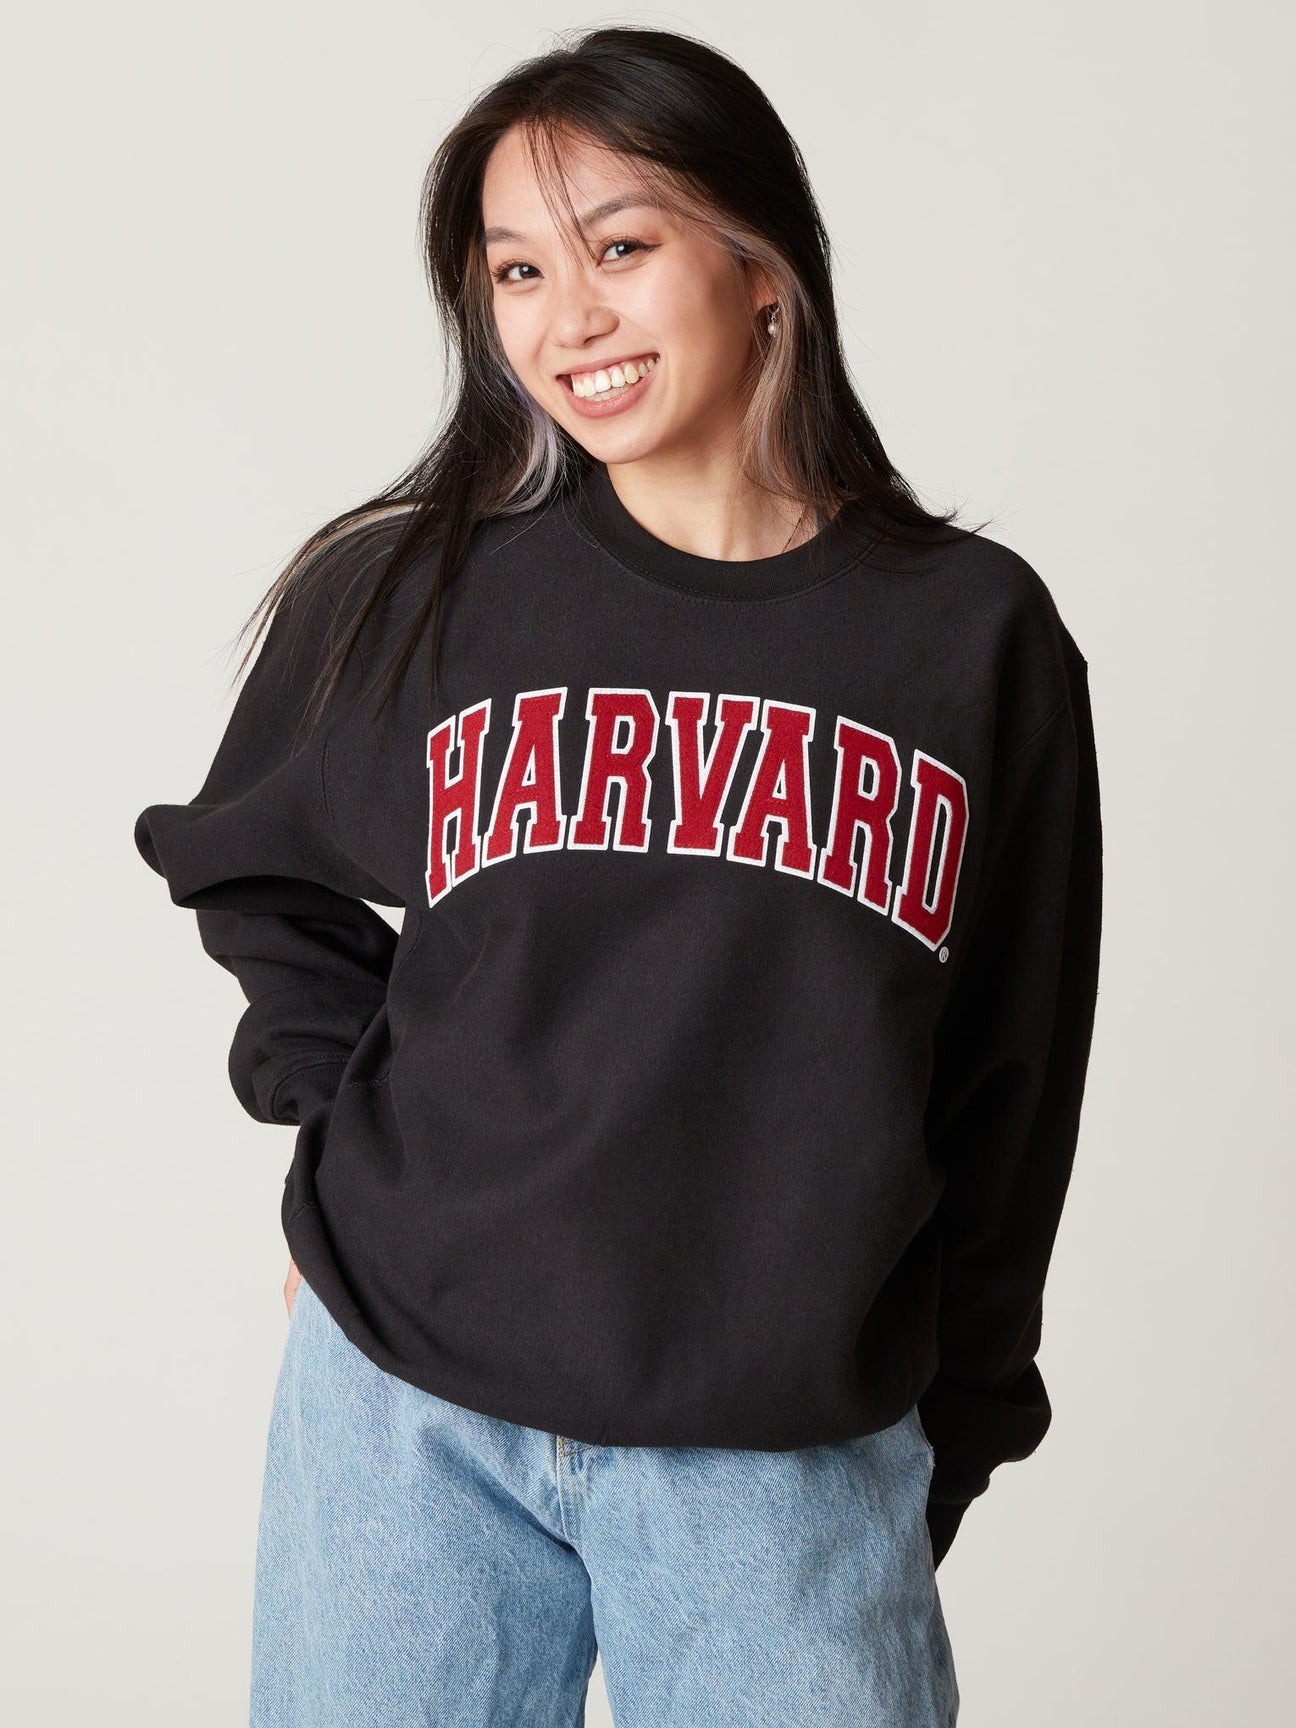 Hats – The Harvard Shop